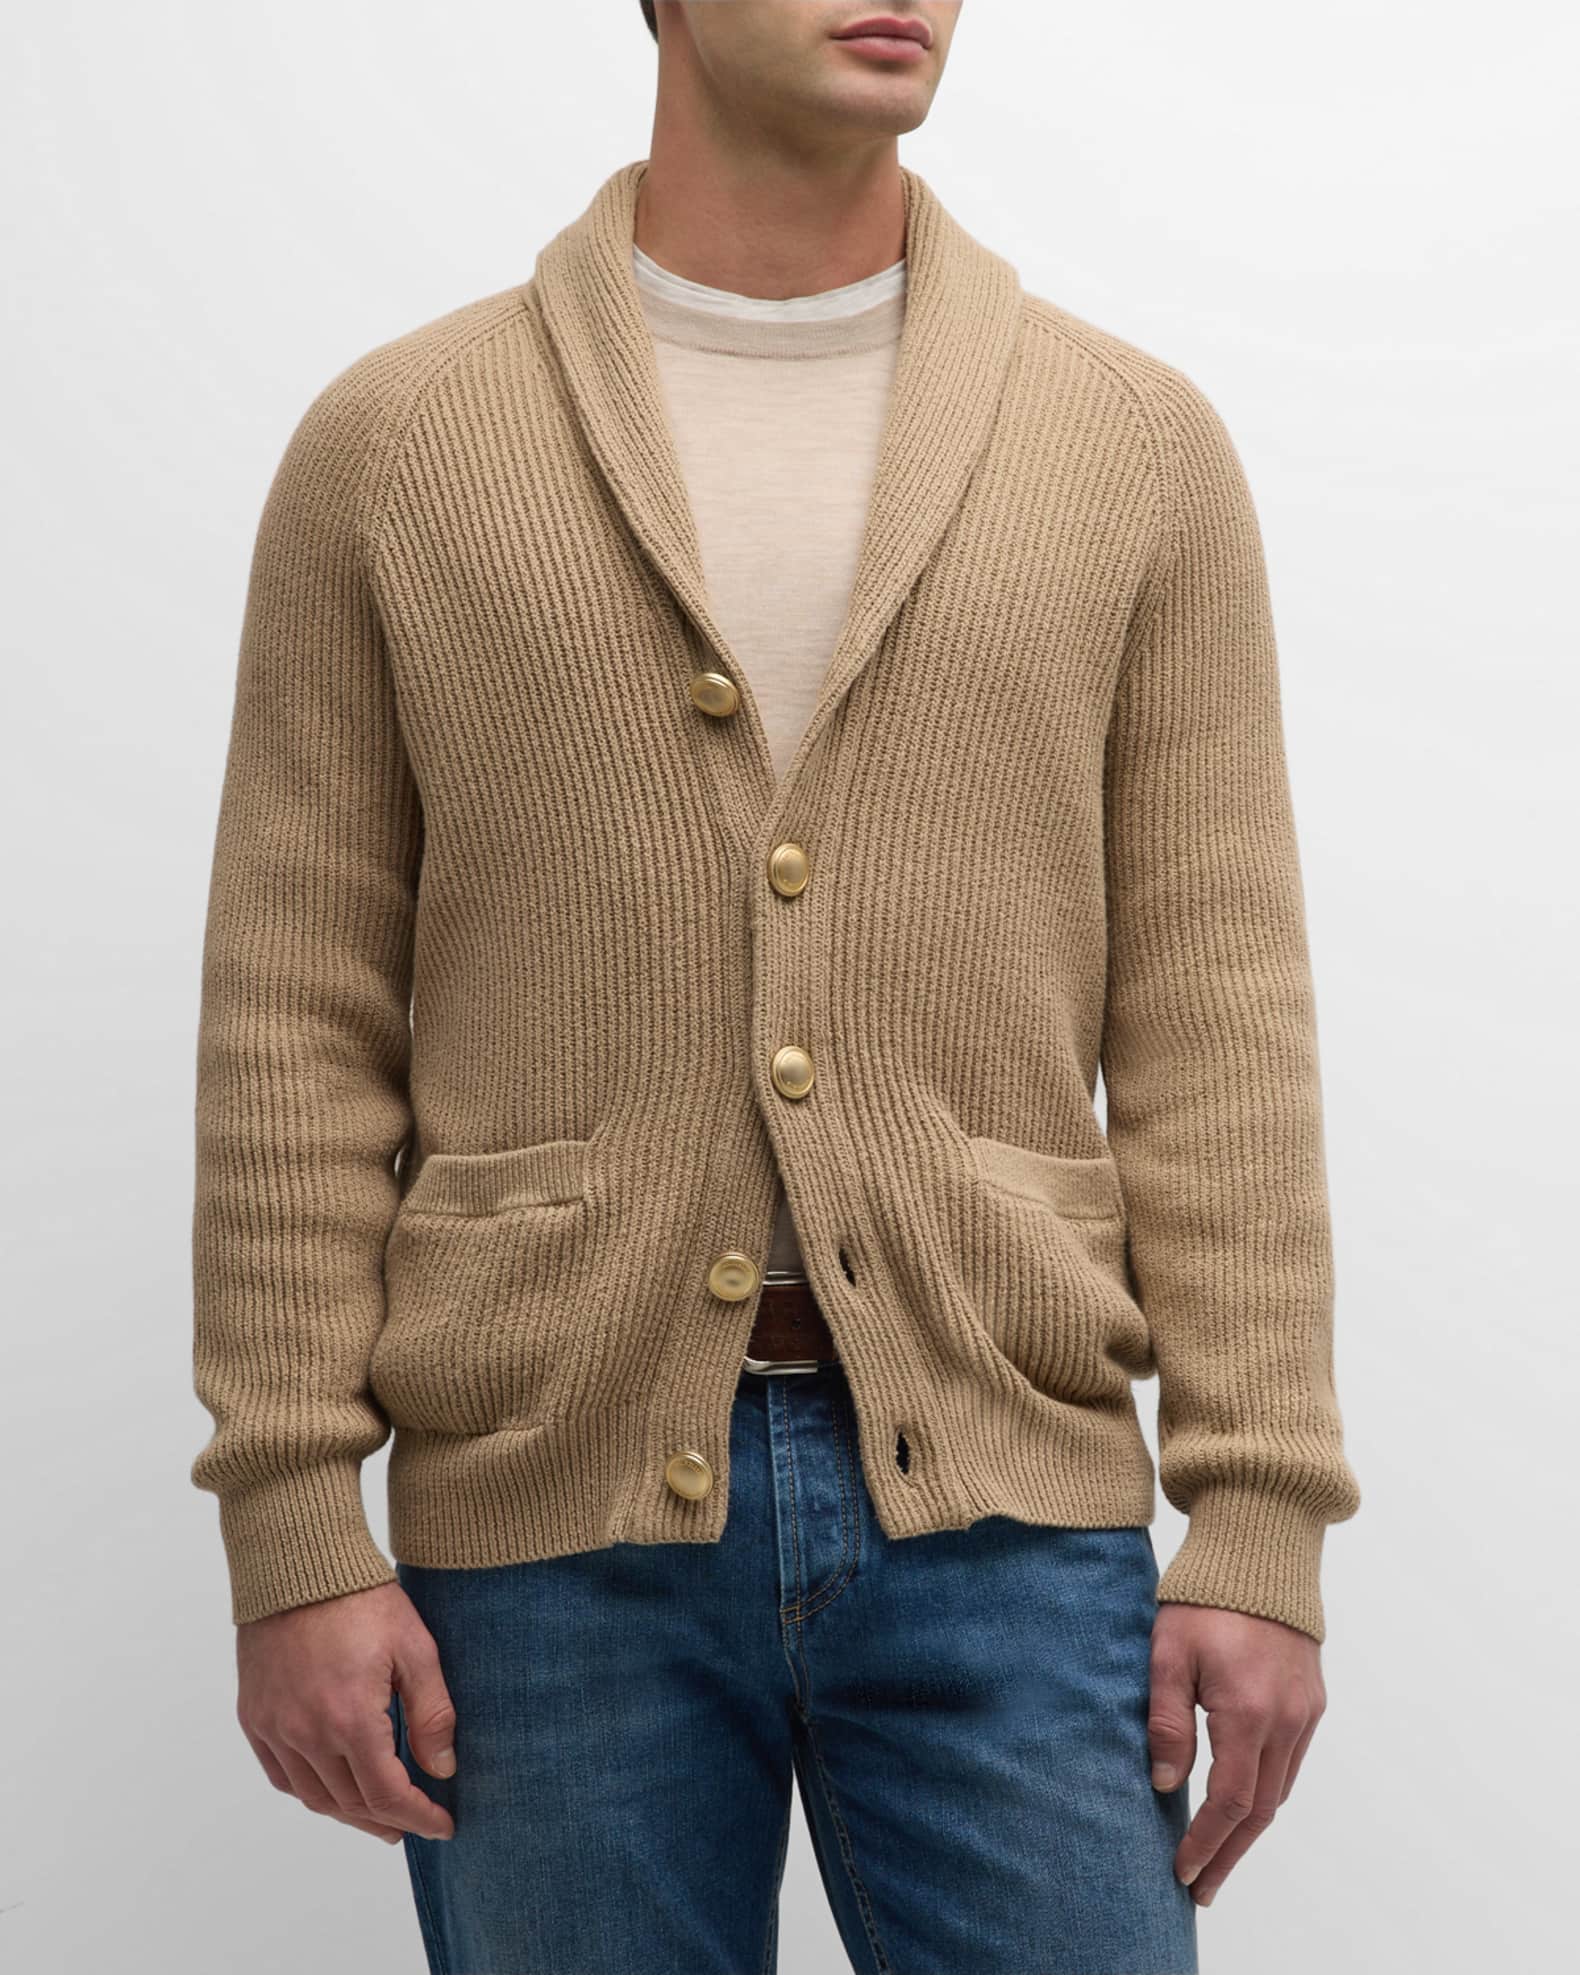 Brunello Cucinelli Men's Cotton Ribbed Shawl Cardigan Sweater